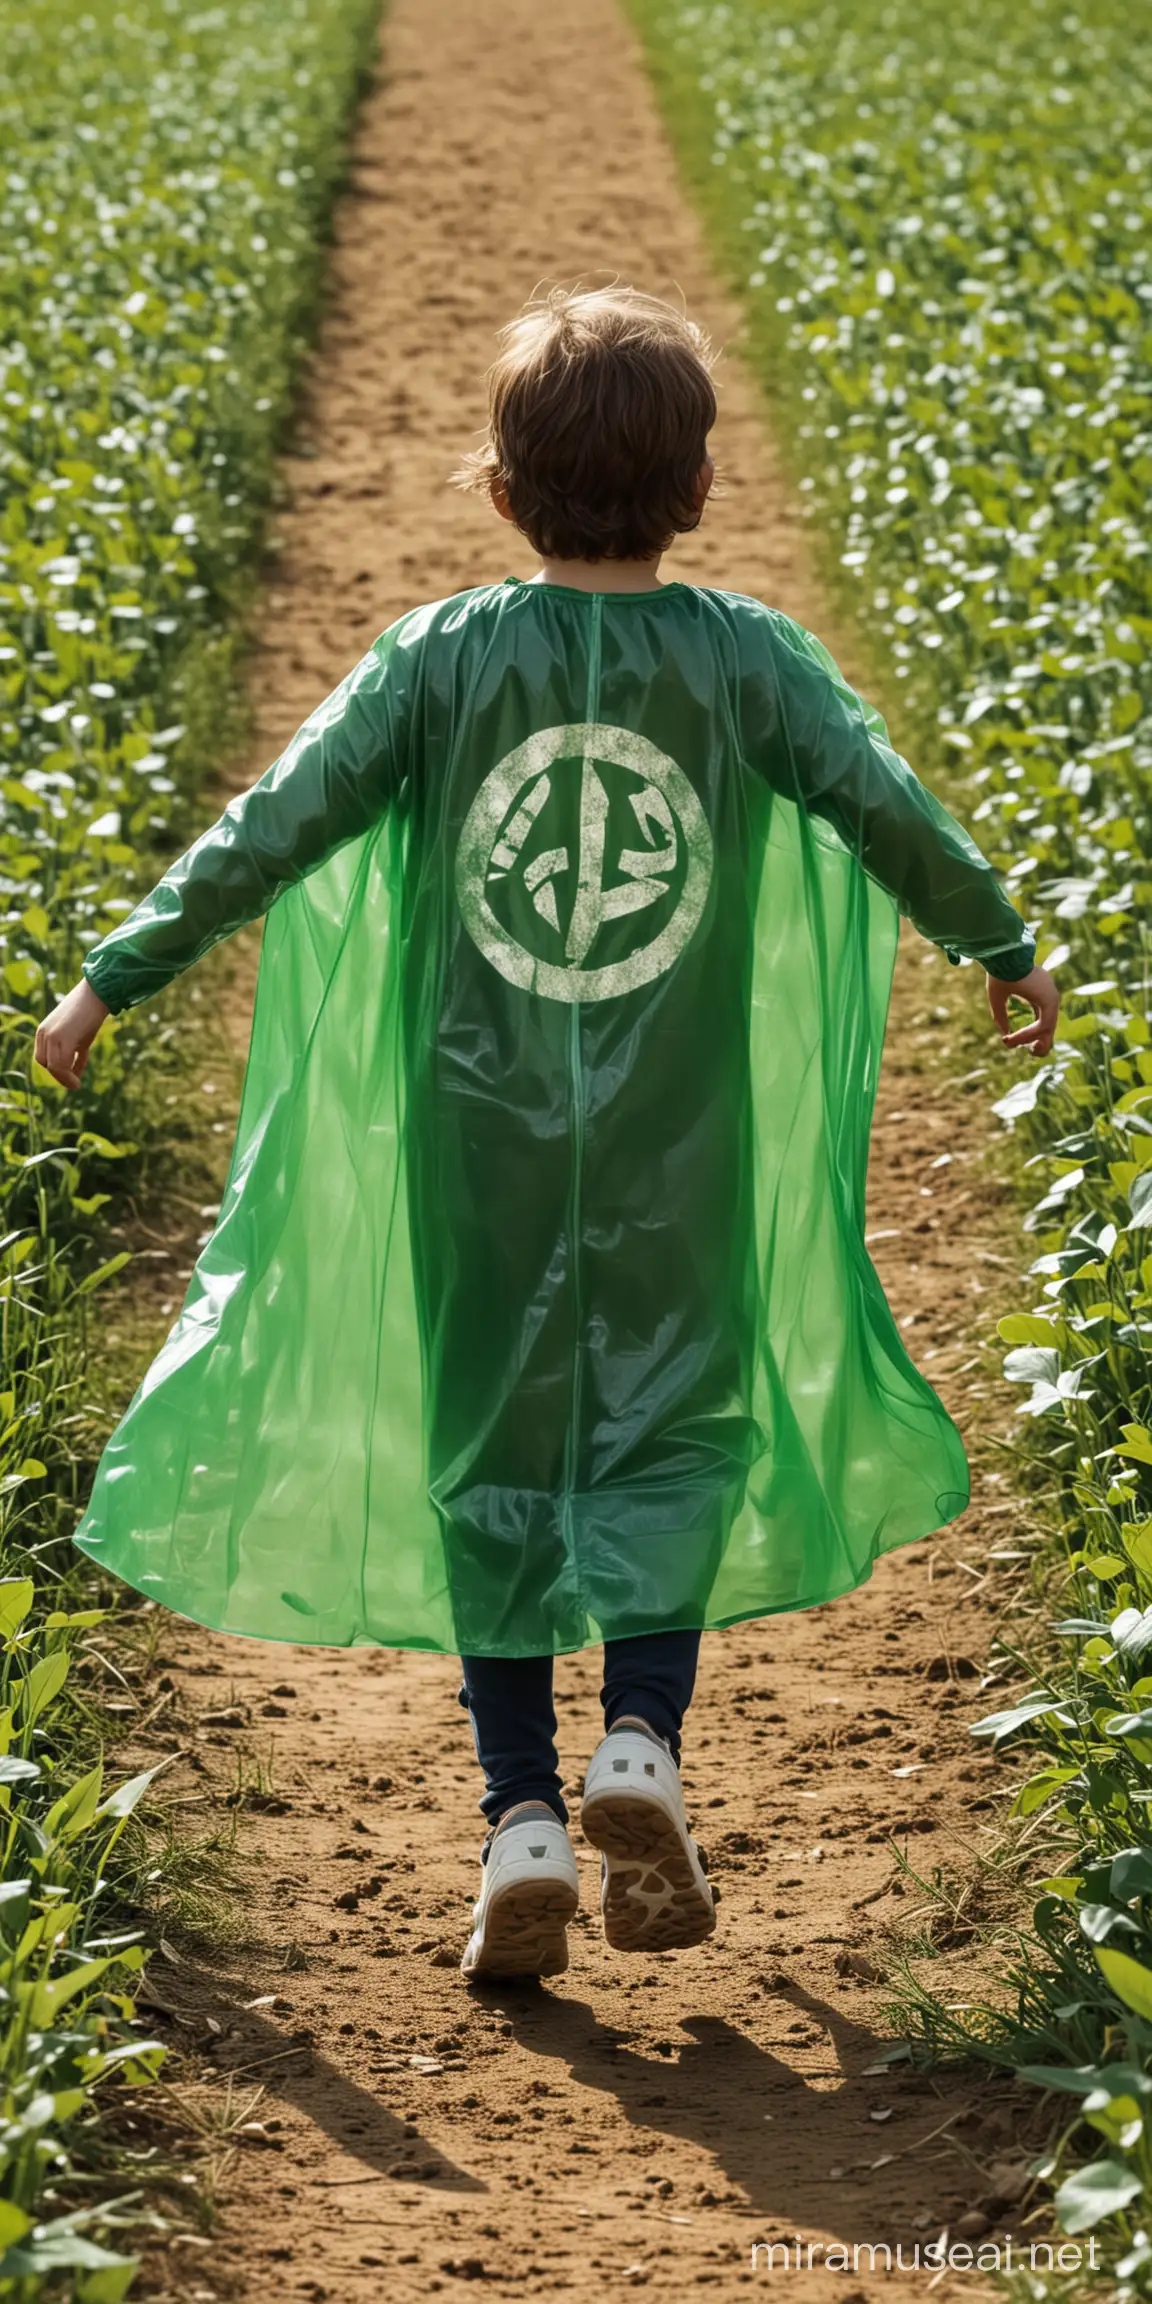 Ecological Superhero Child Running in Green Field